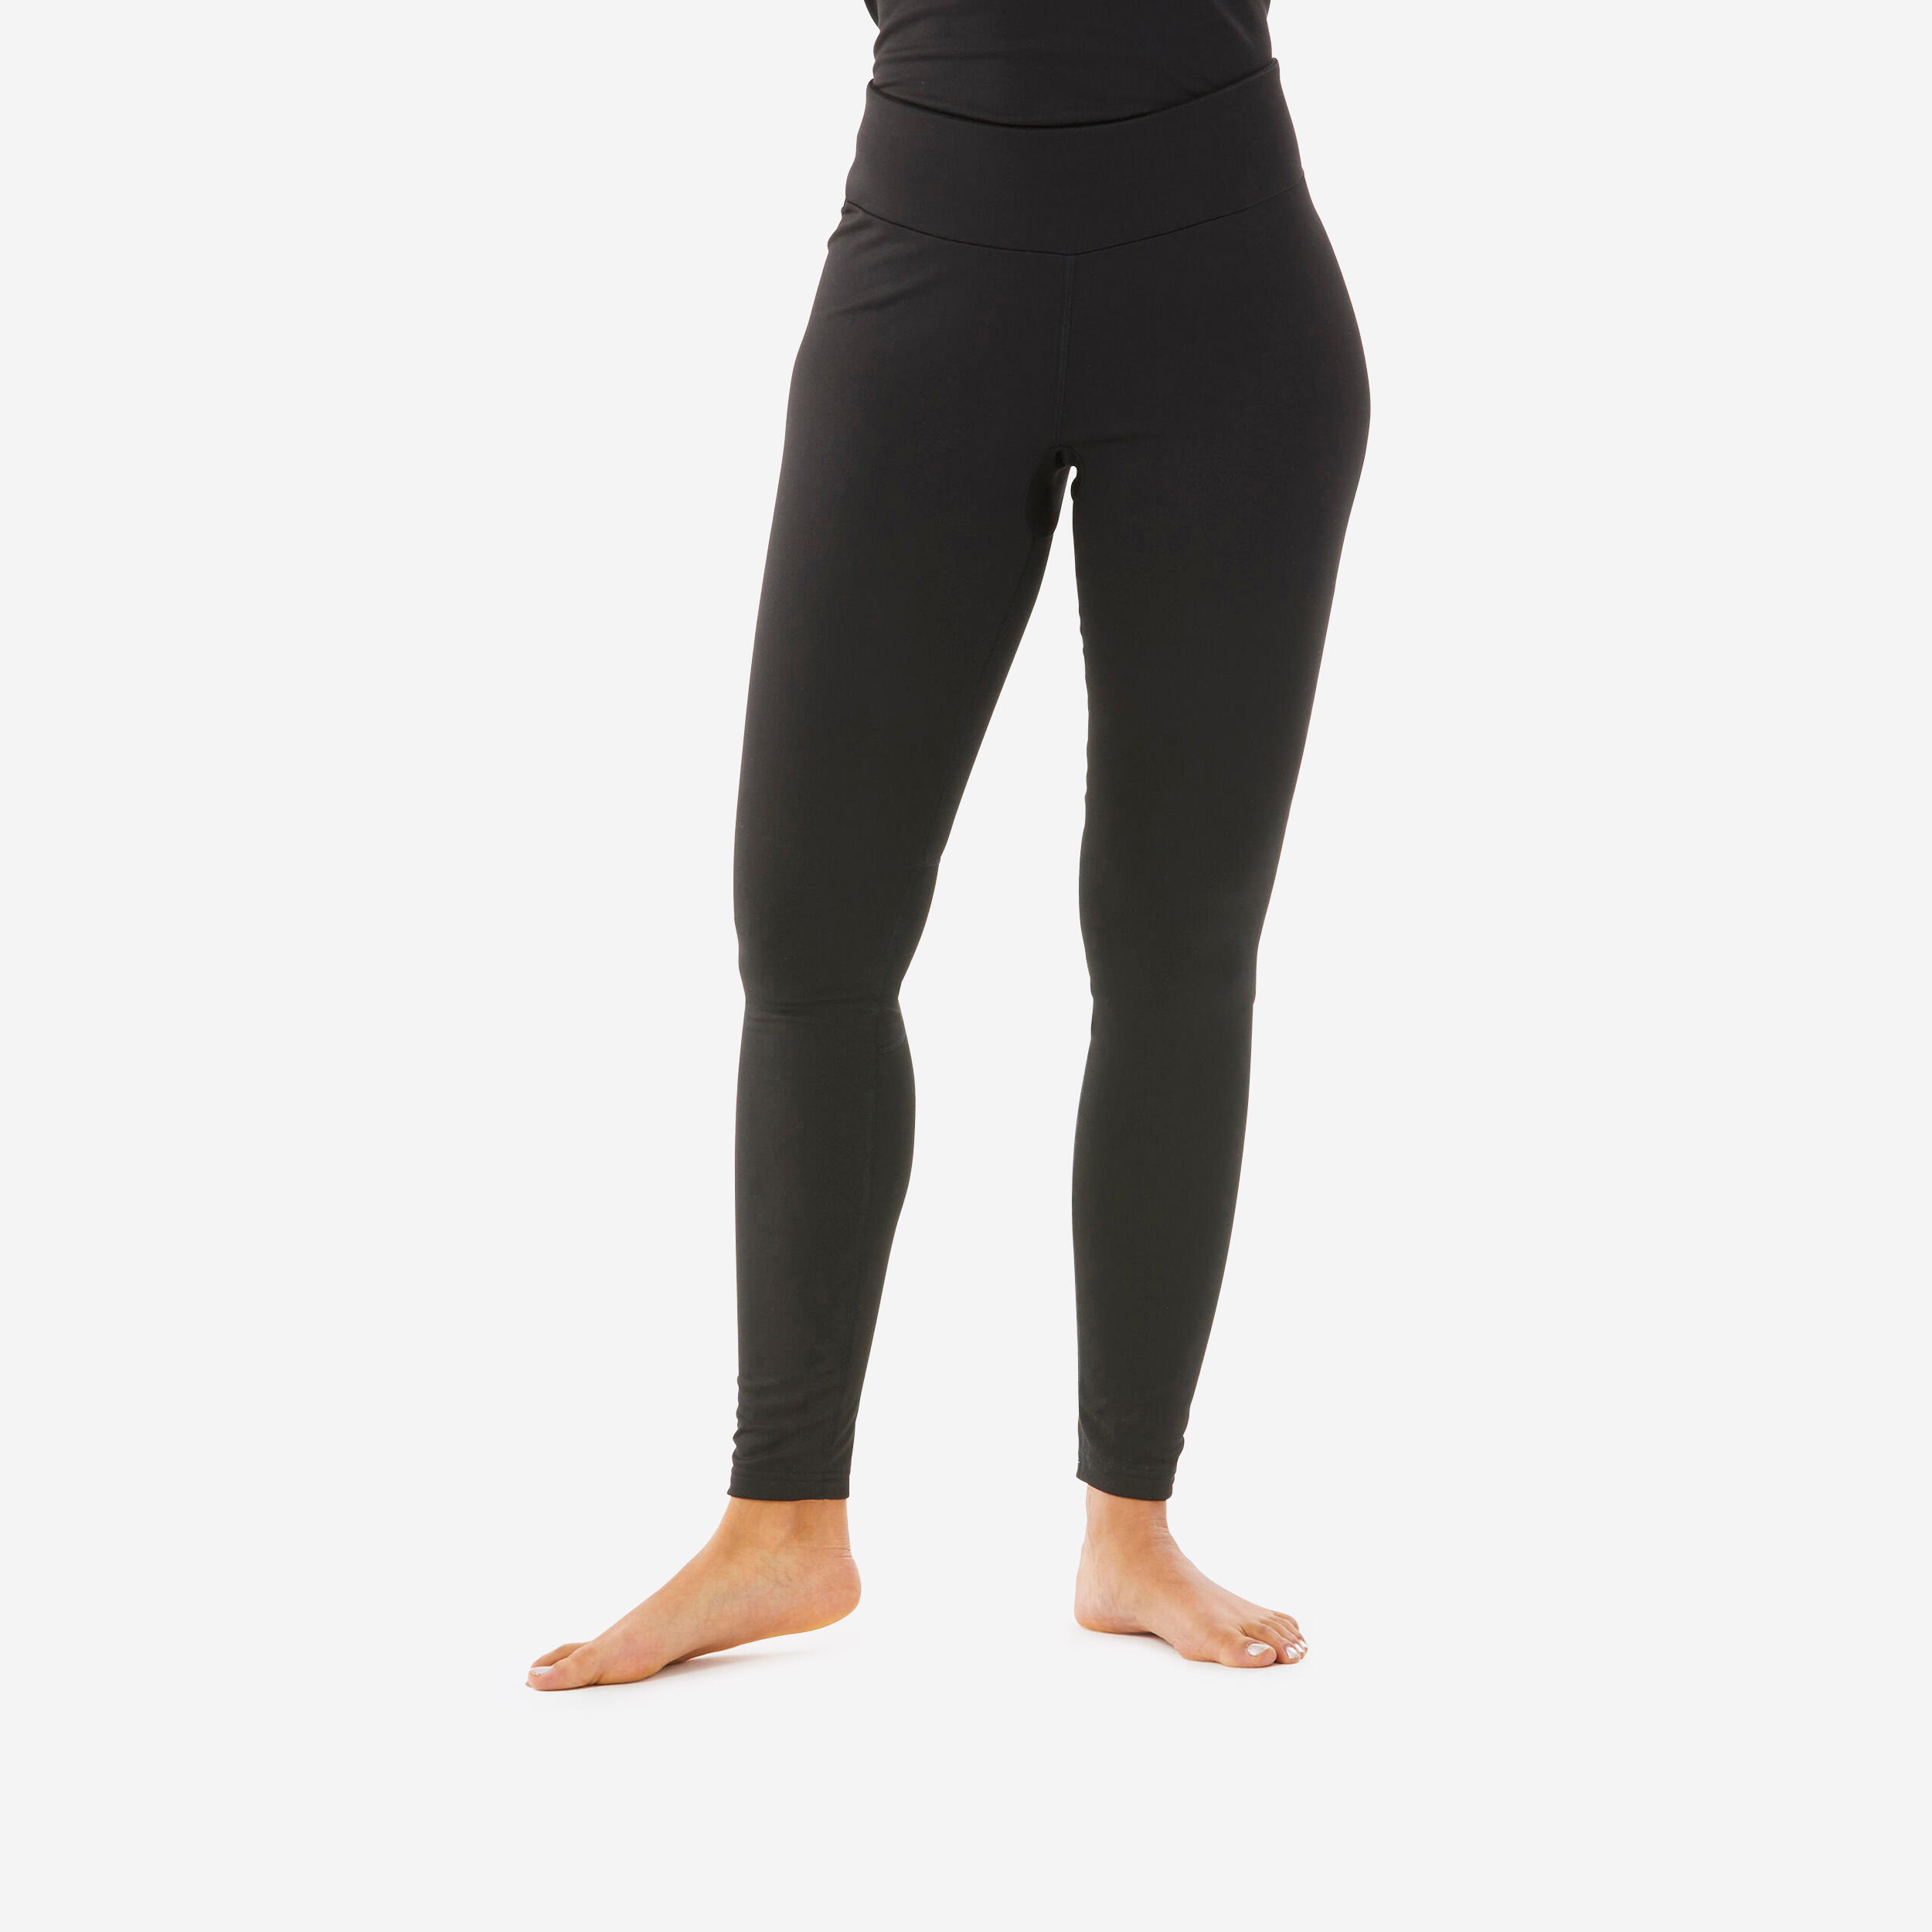 Buy HSR Winter Warm Leggings Women Thermal Leggings Pants Fleece Lined  Thick Tights Women Pyjama Thermal Online at Best Prices in India |  Flipkart.com